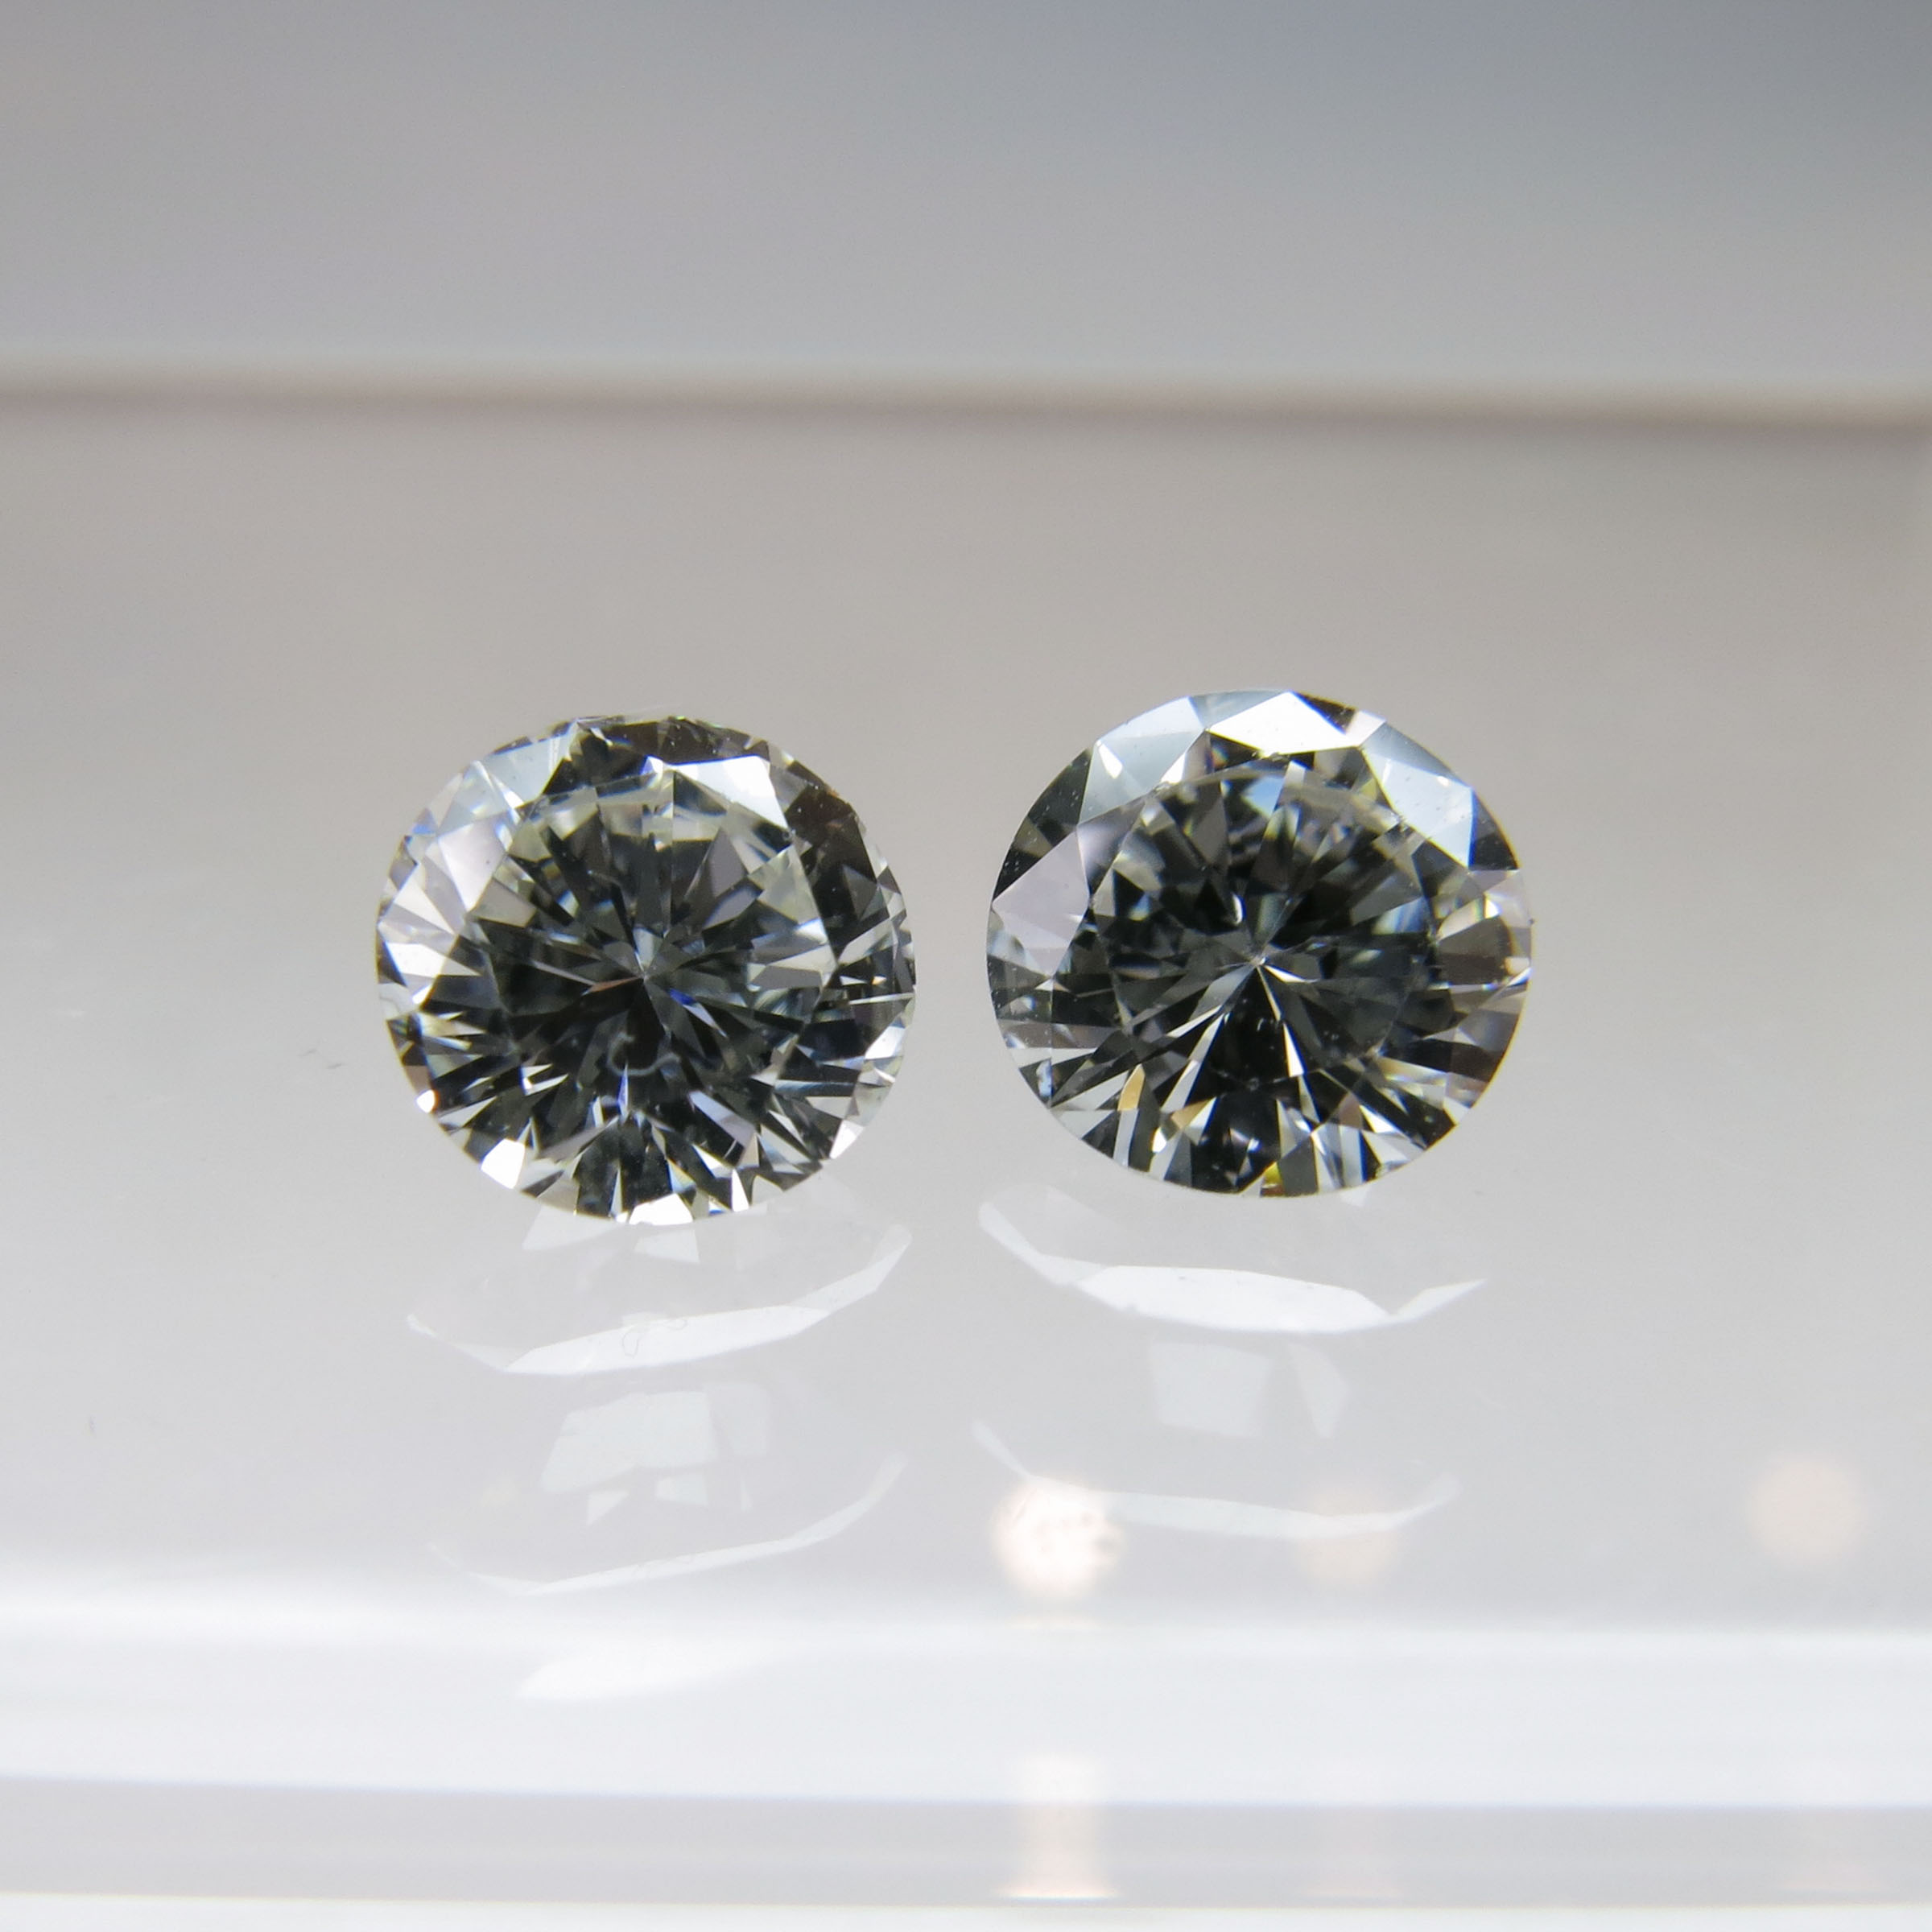 Two Unmounted Brilliant Cut Diamonds